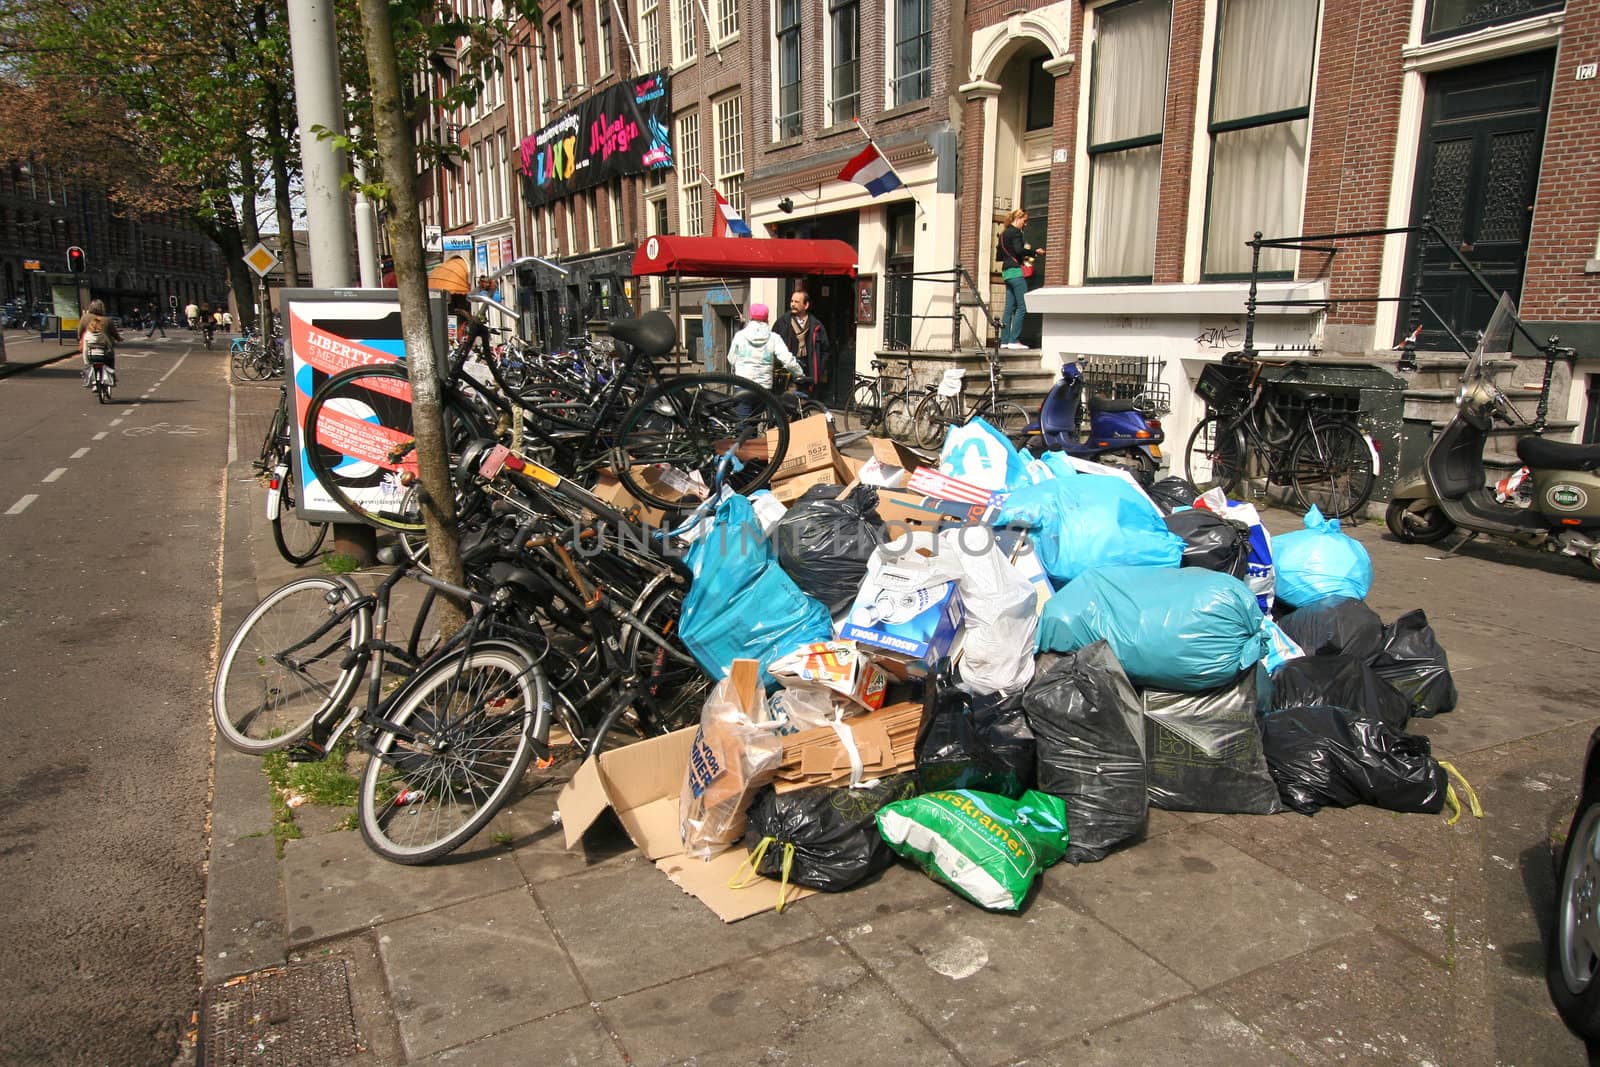 Garbage in the Street by JanKranendonk